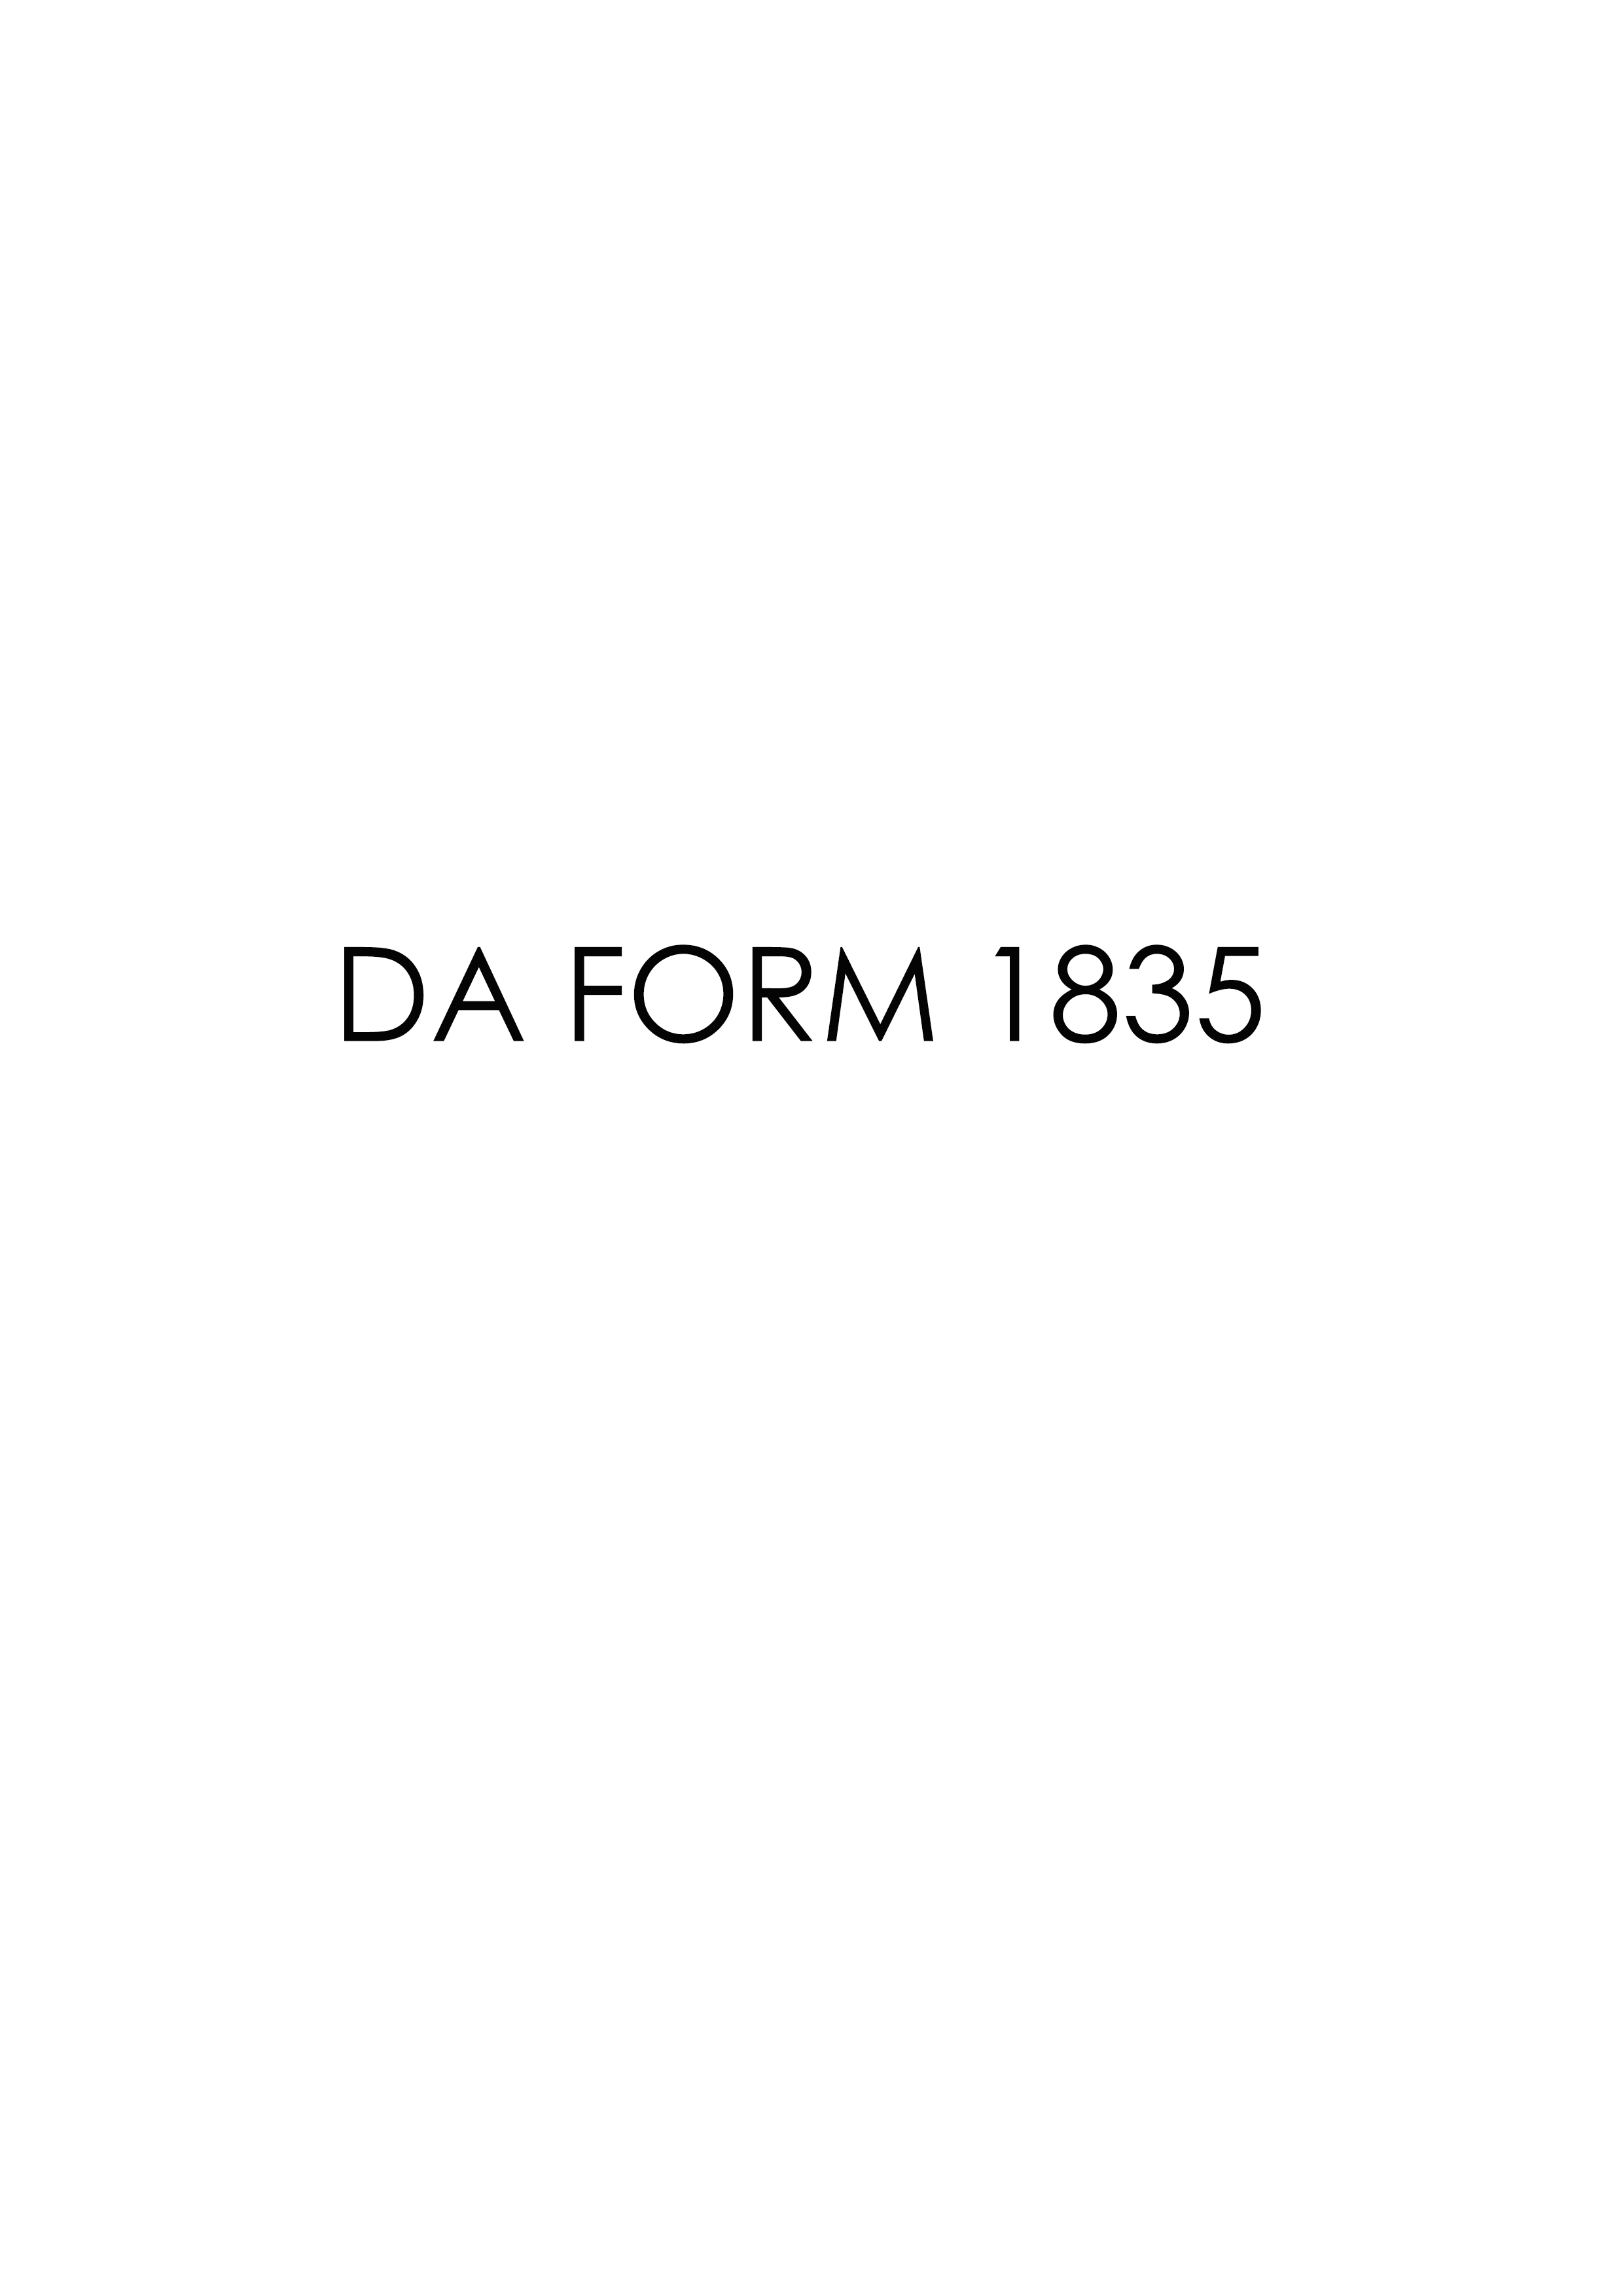 Download da 1835 Form Free